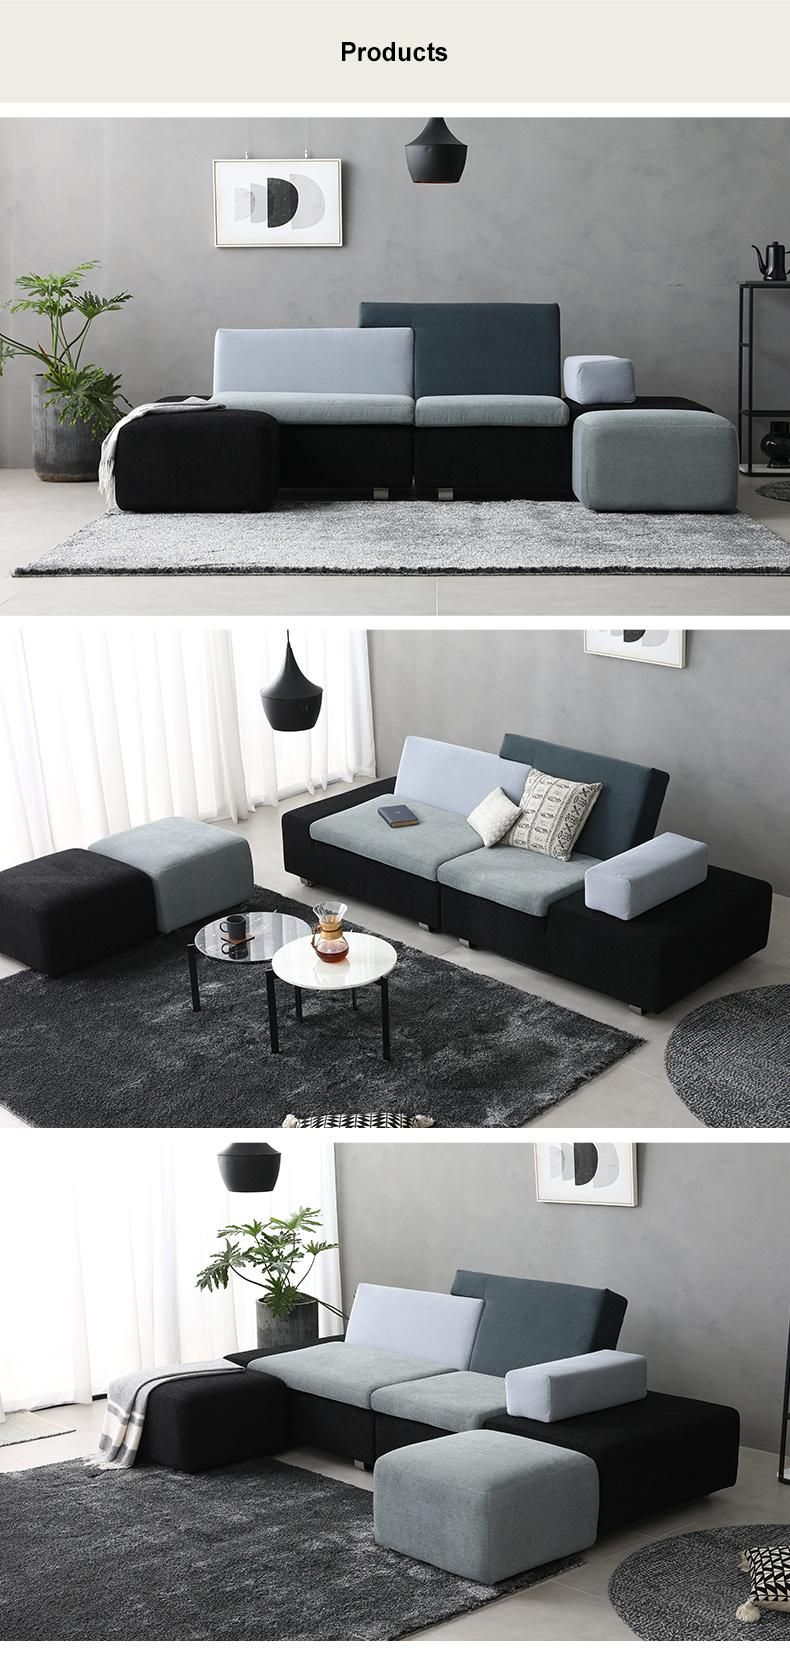 Sponge Recliner Modern Furniture Homecorner Sofa